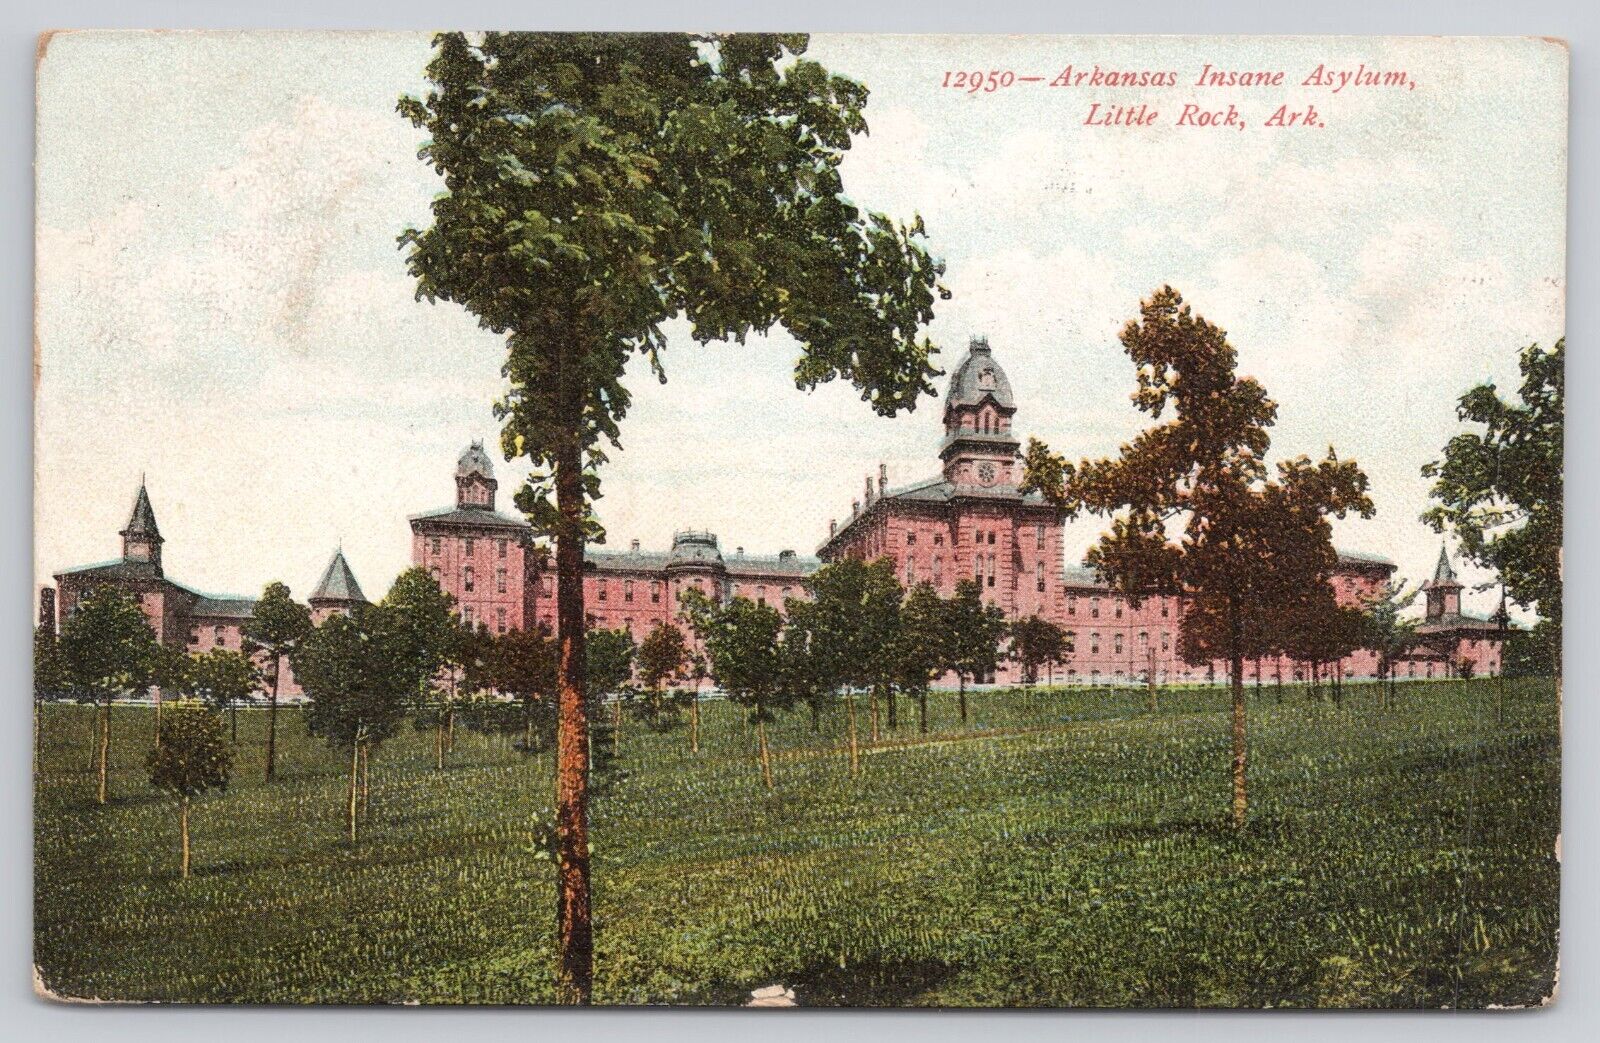 Arkansas Insane Asylum State Hospital Little Rock AR 1908 Antique Postcard